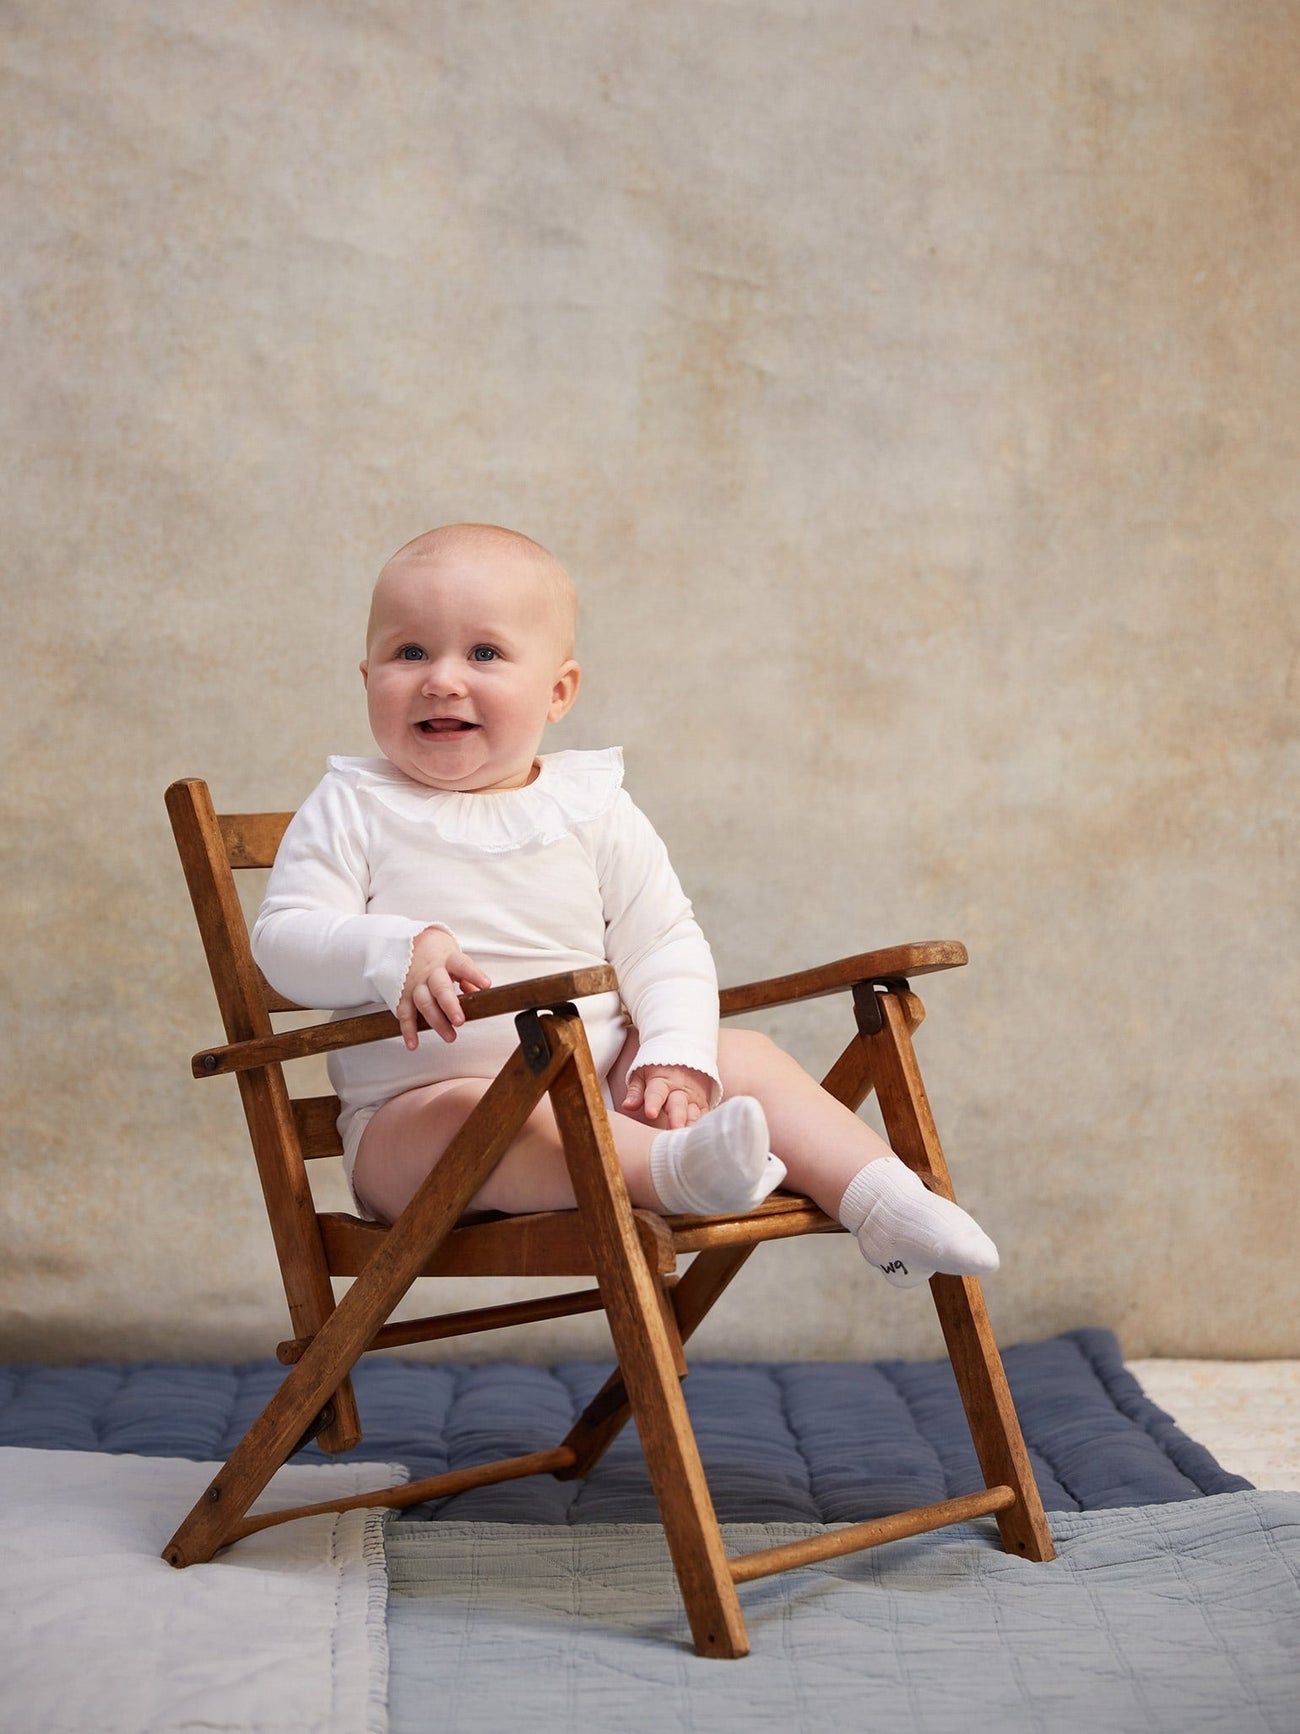 White Laya Long Sleeve Baby Bodysuit